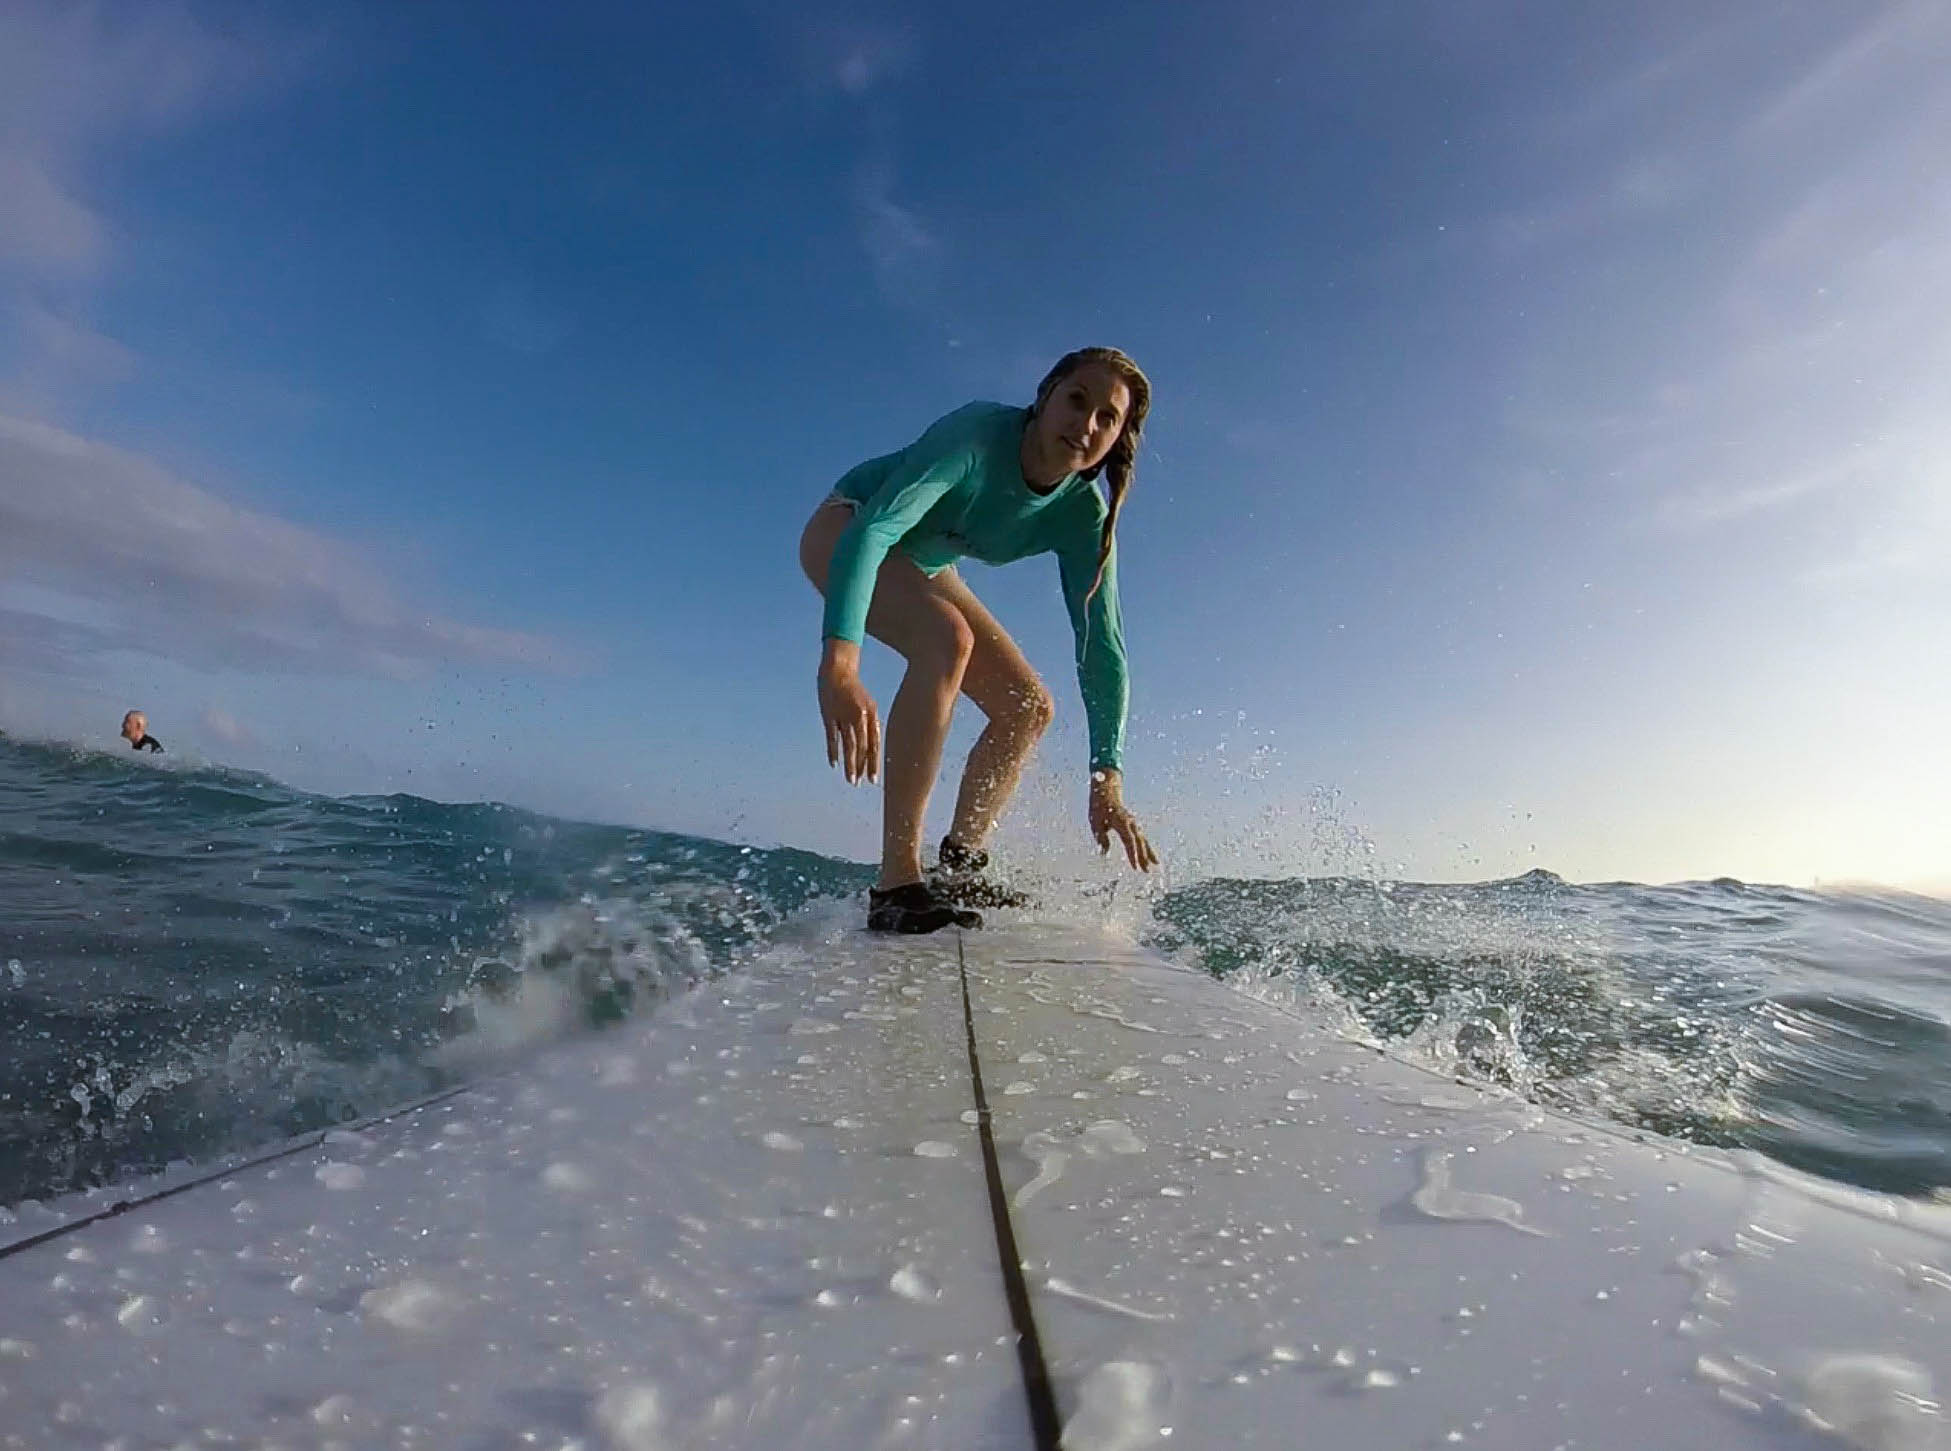 Surfing at Waikiki Beach - 13 Things To Do On Oahu | Kaci Nicole